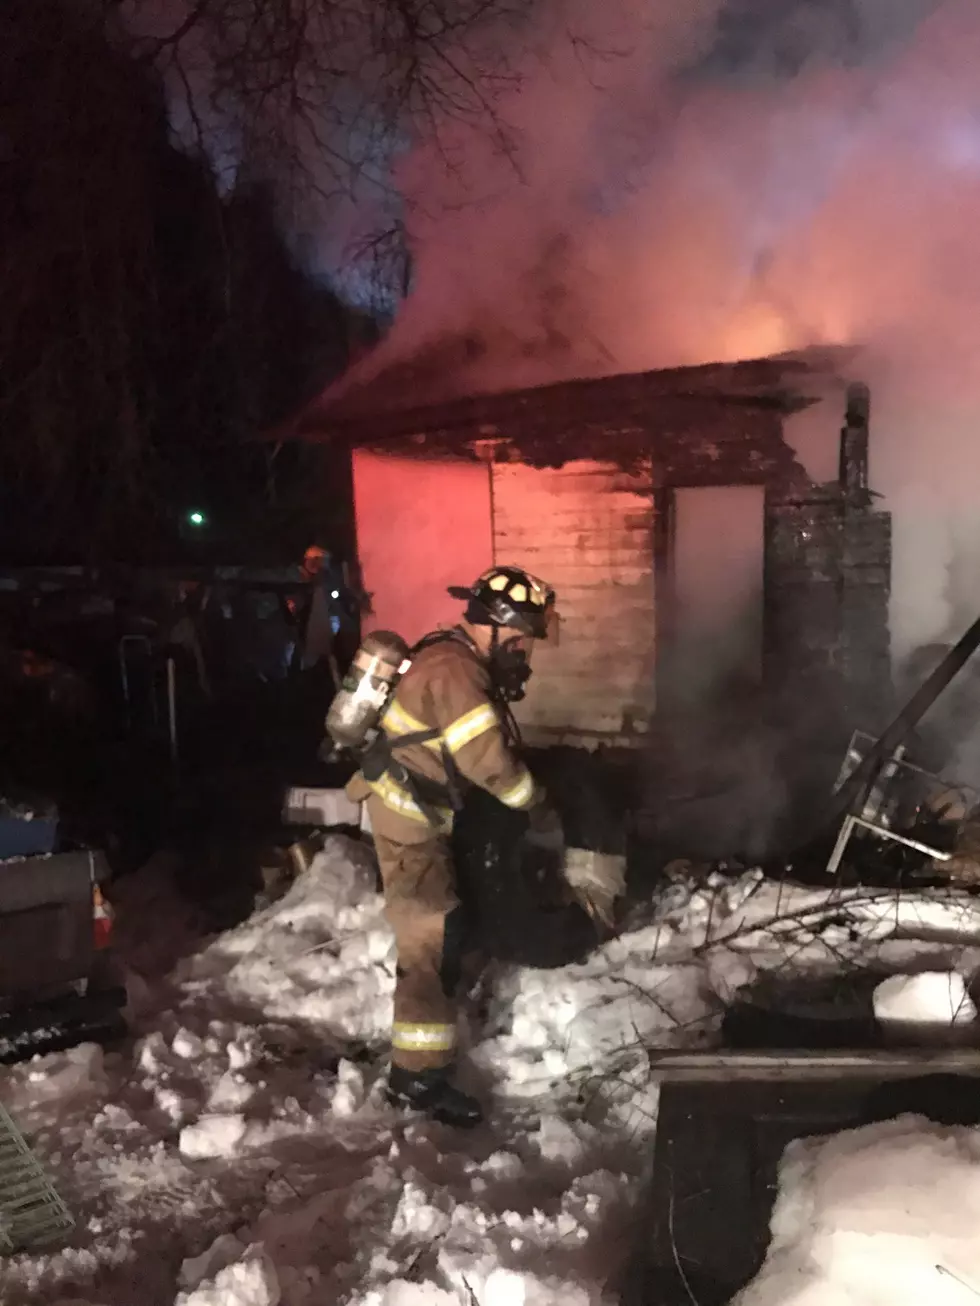 Fire destroys Mabton home